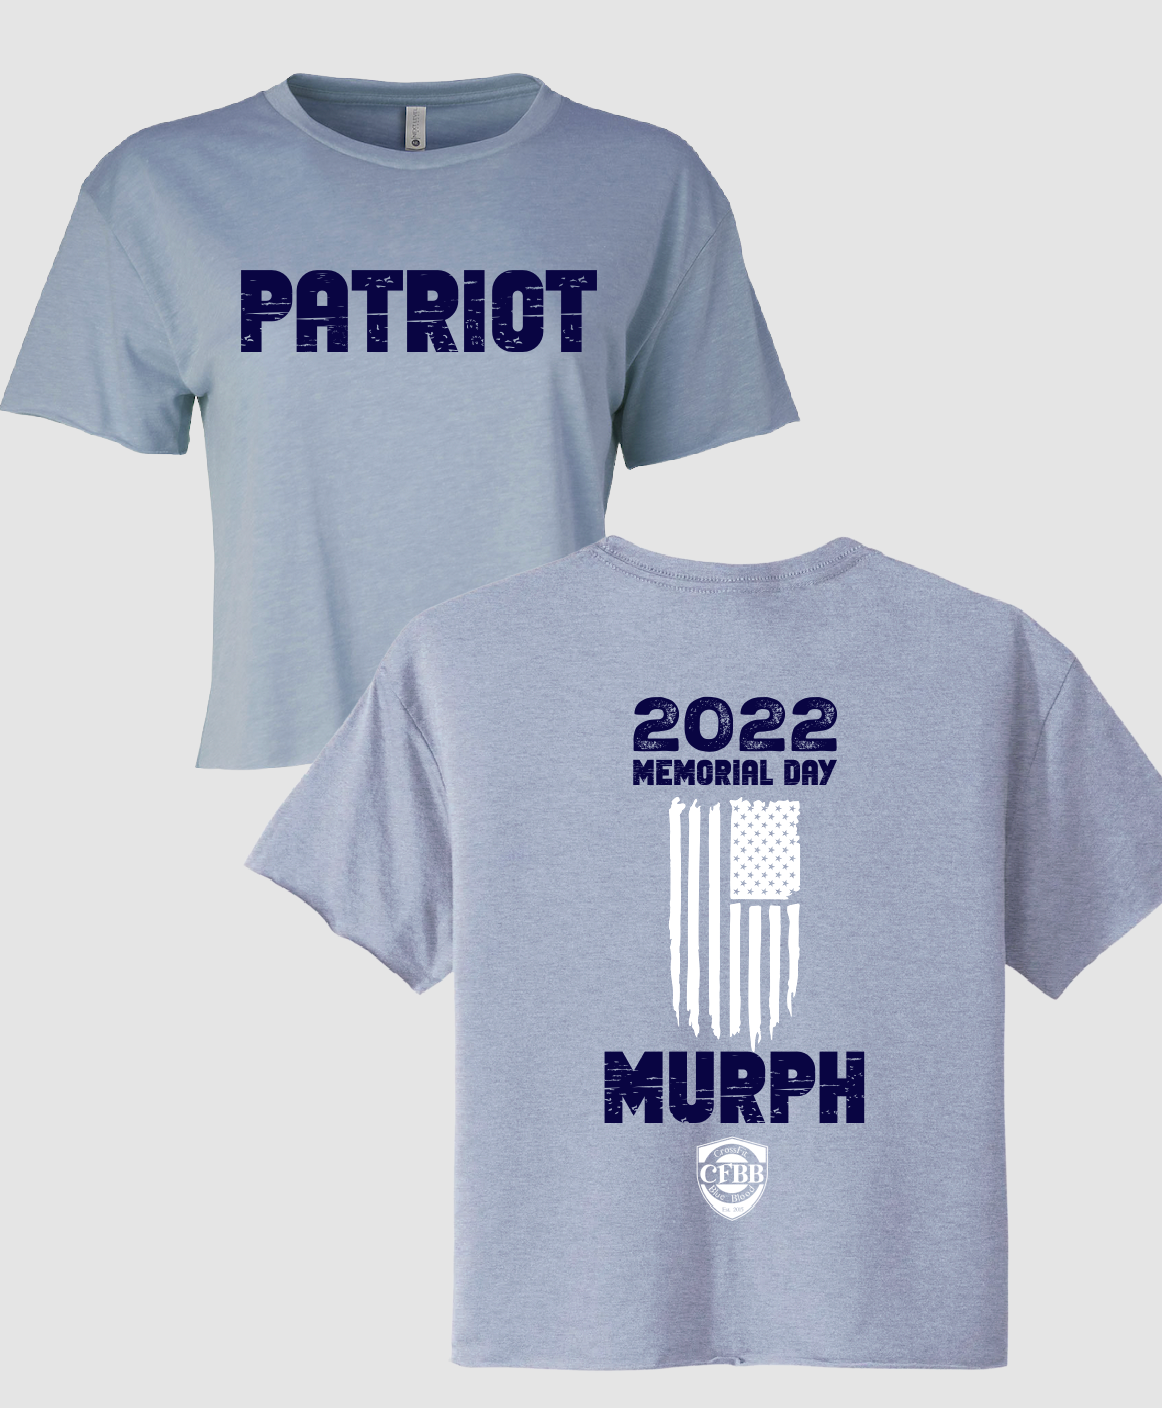 CFBB Murph Memorial Day WOD /CROPPED Tee/ Memorial Day Shirt - Crop Shirt